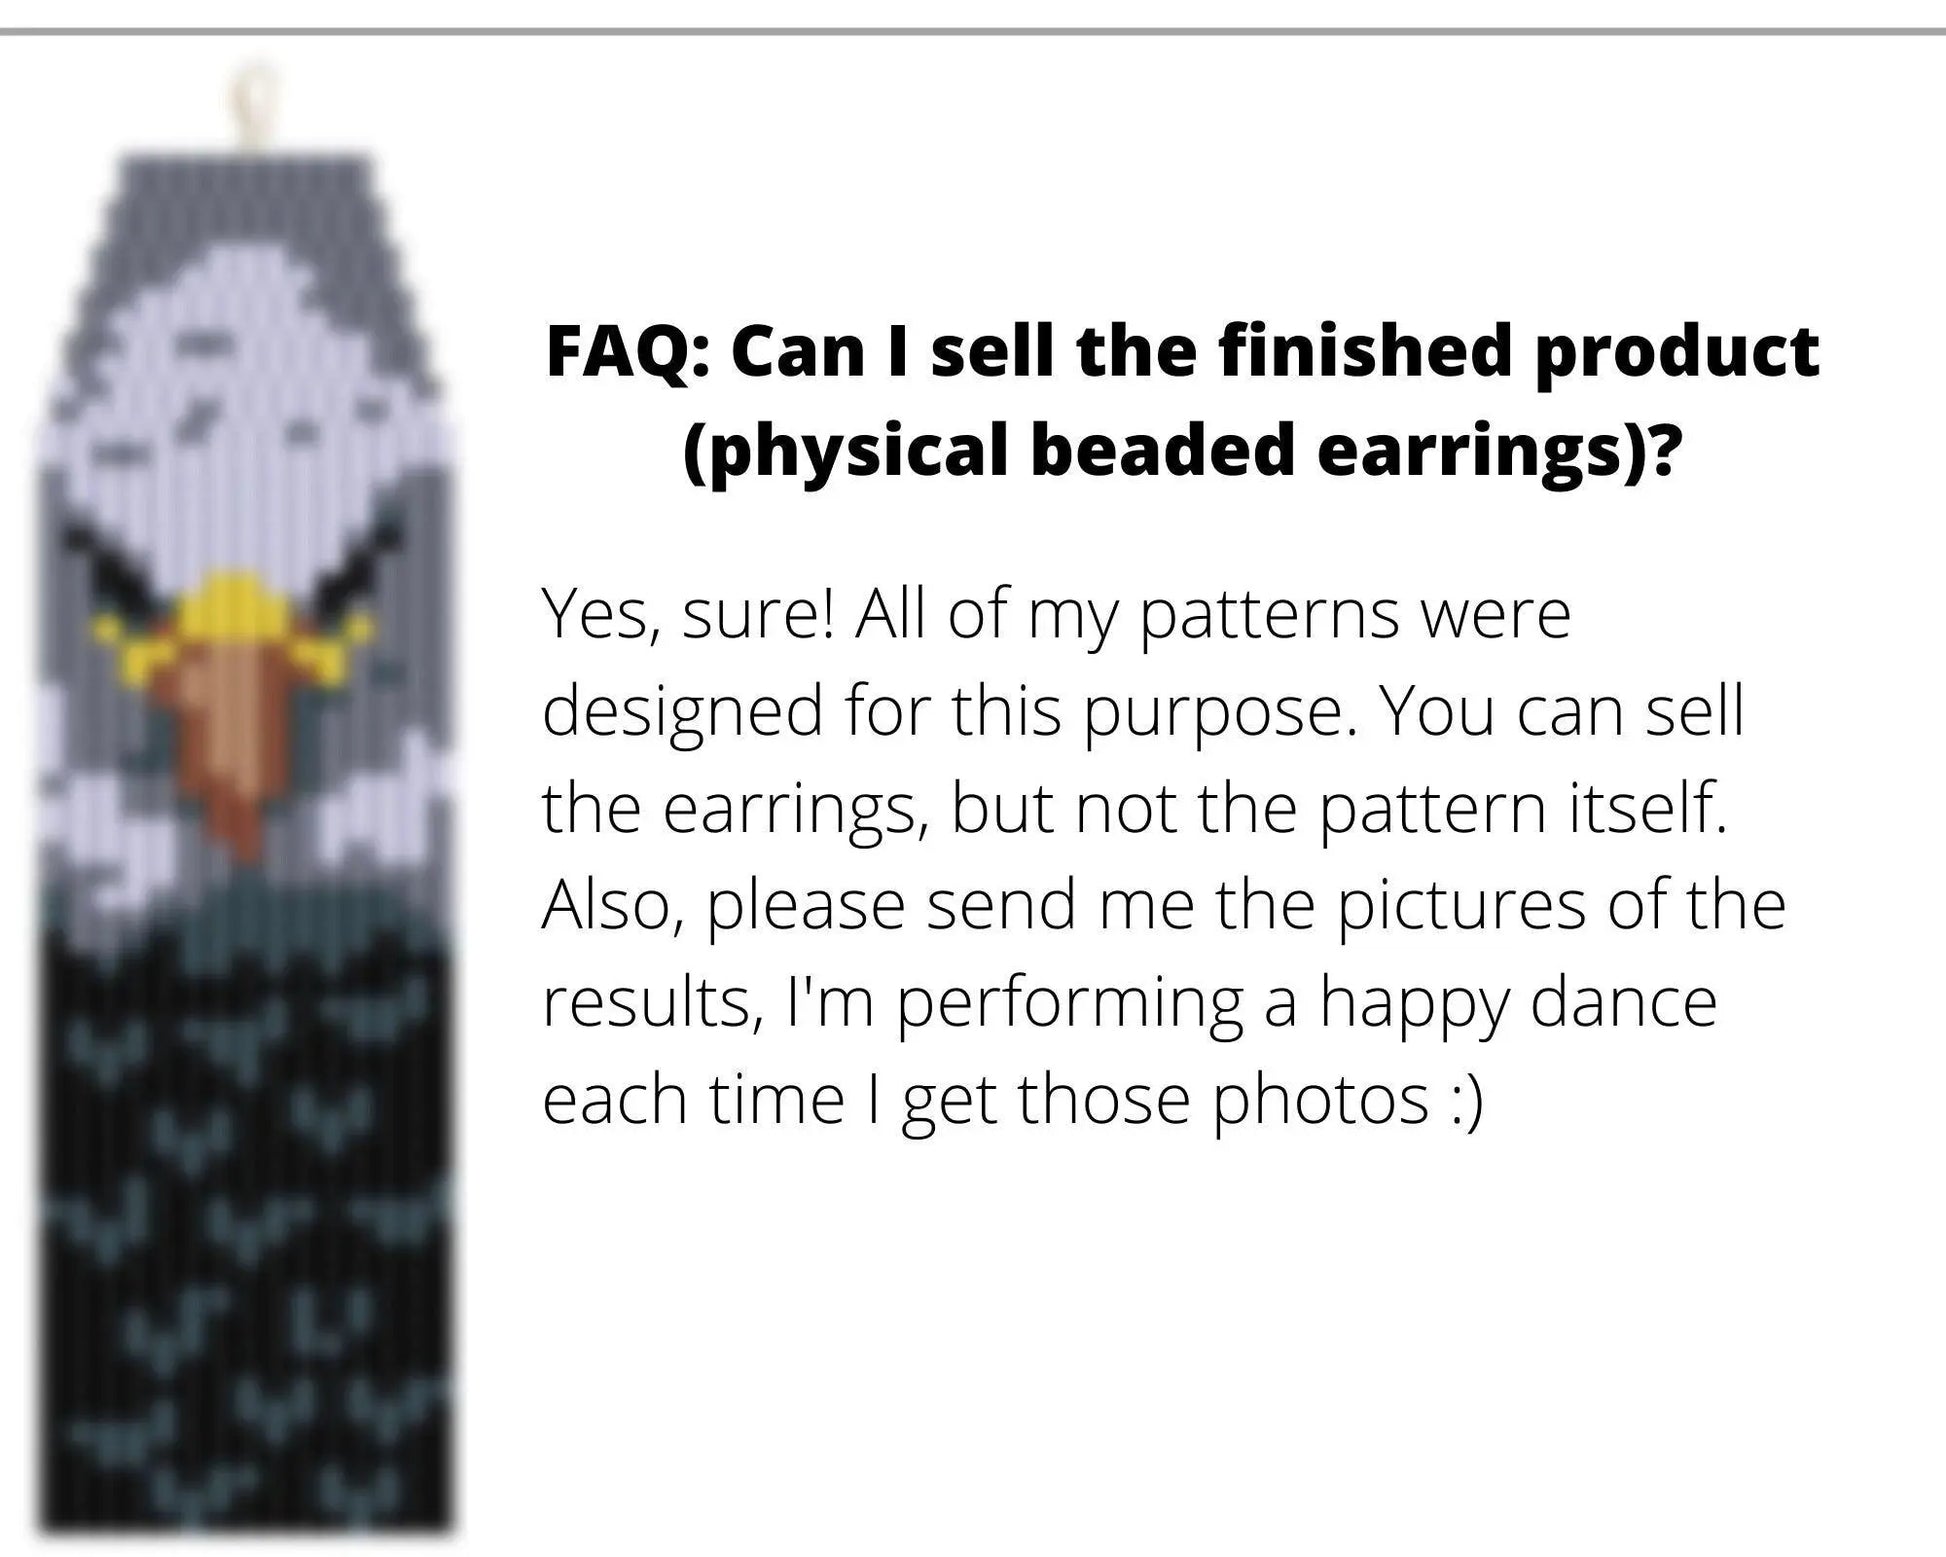 Bald Eagle Brick Stitch pattern for fringe beaded earrings - NikoBeadsUA